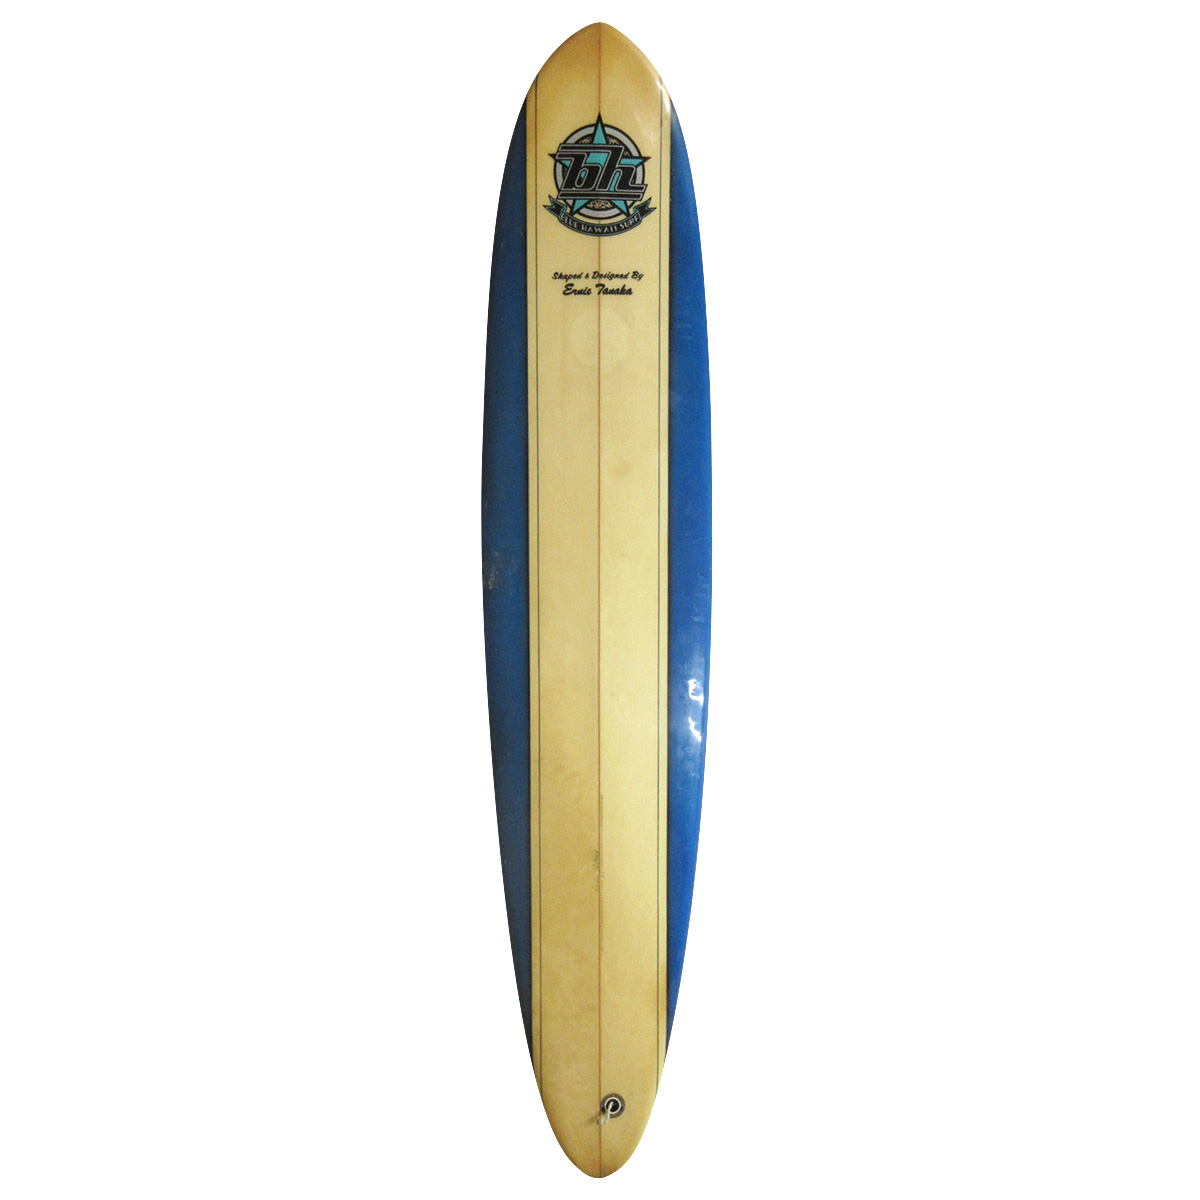  / BLUE HAWAII SURFBOARDS / TWINZER 8'4 Shaped by Ernie Tanaka